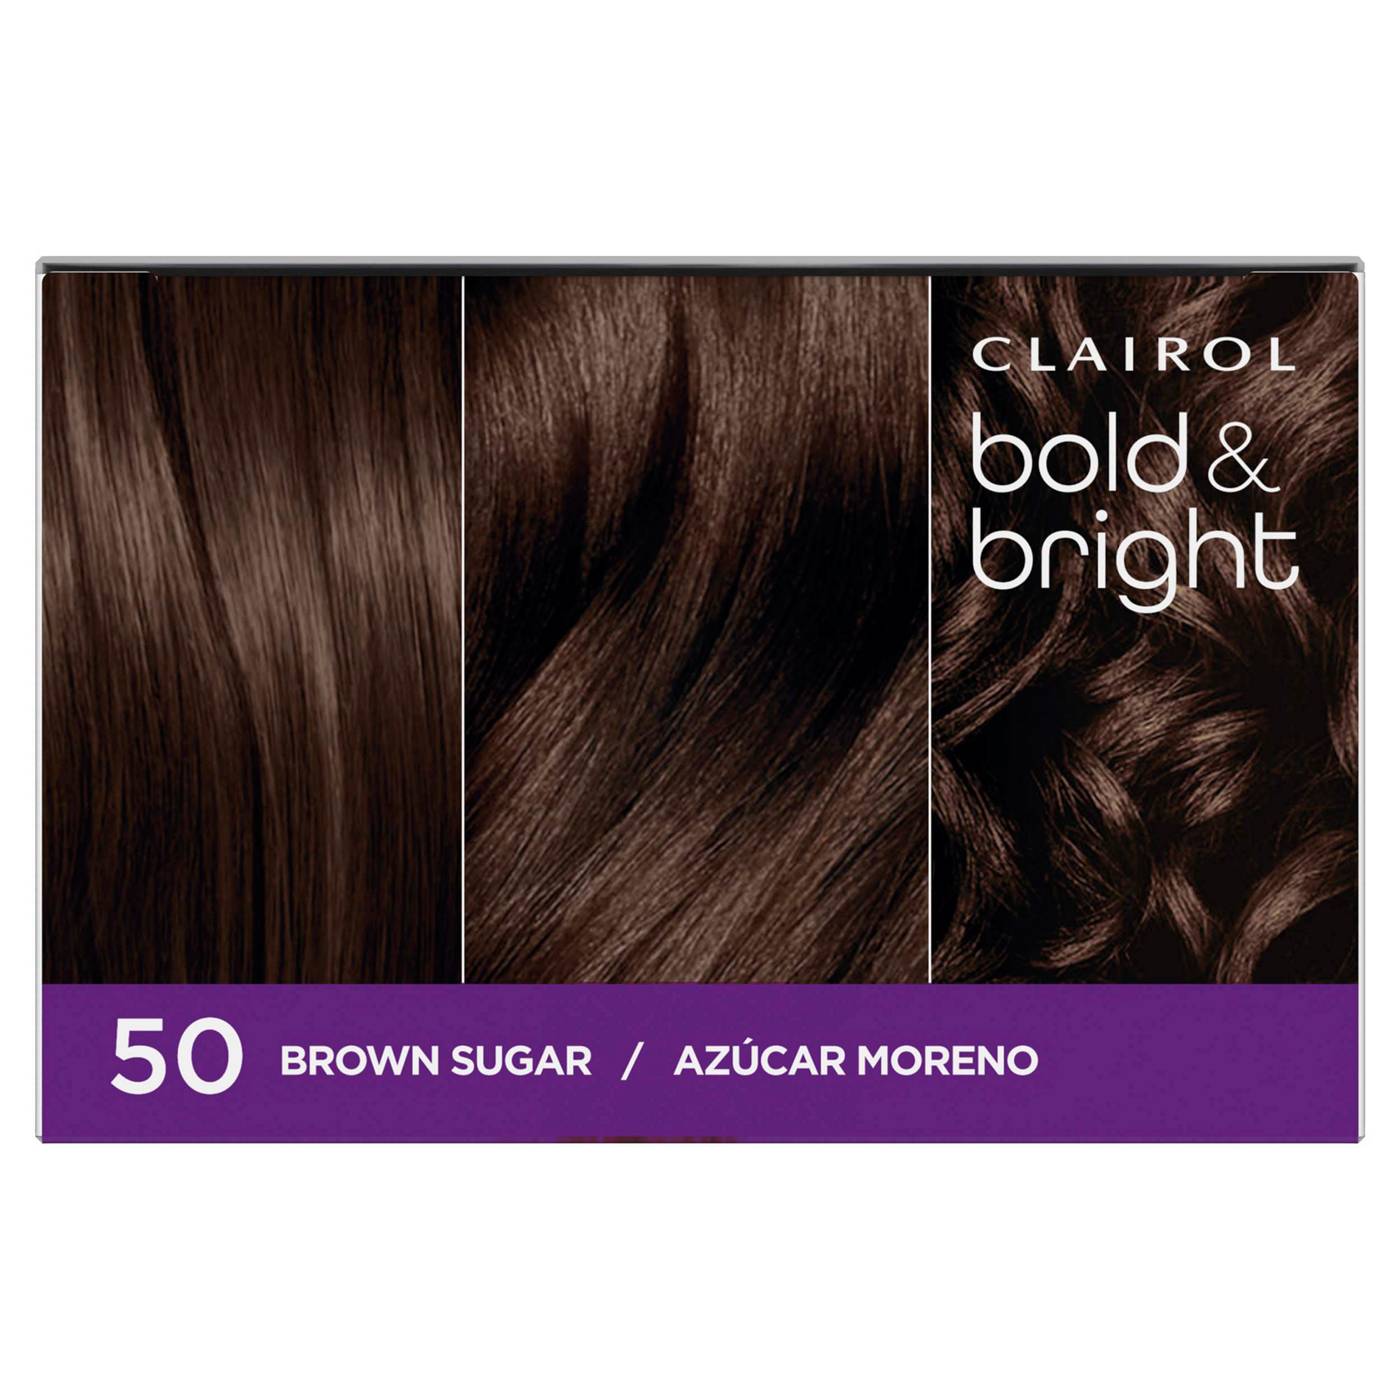 Clairol Bold & Bright Permanent Hair Color - 50 Brown Sugar; image 3 of 11